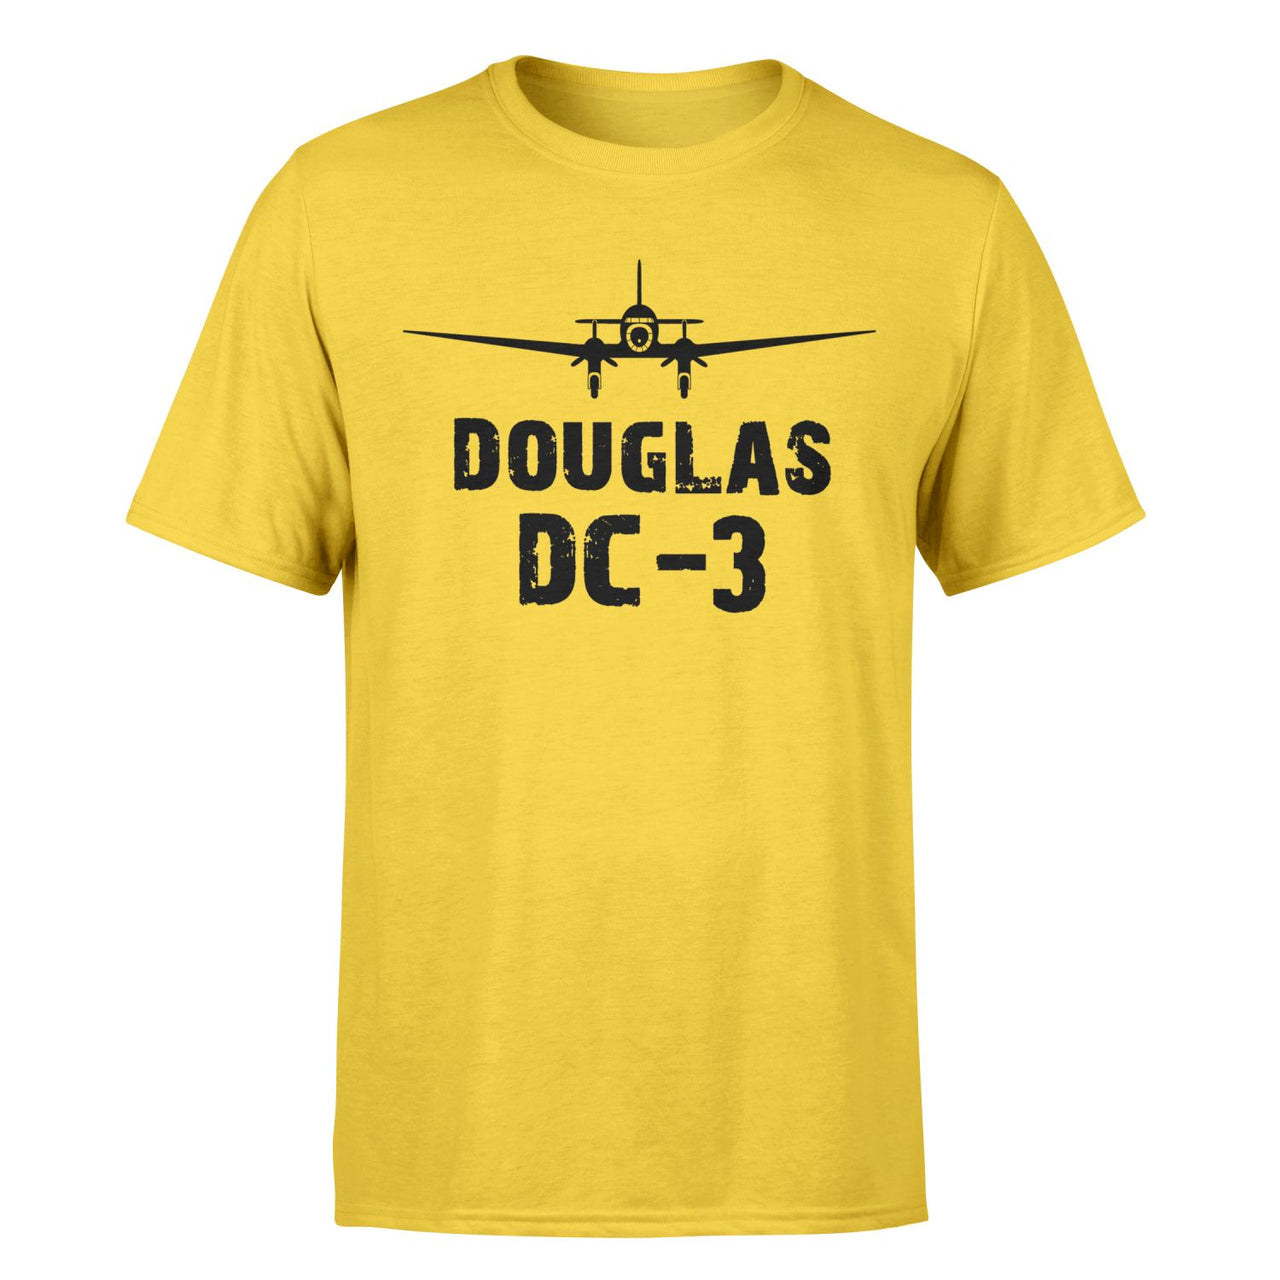 Douglas DC-3 & Plane Designed T-Shirts